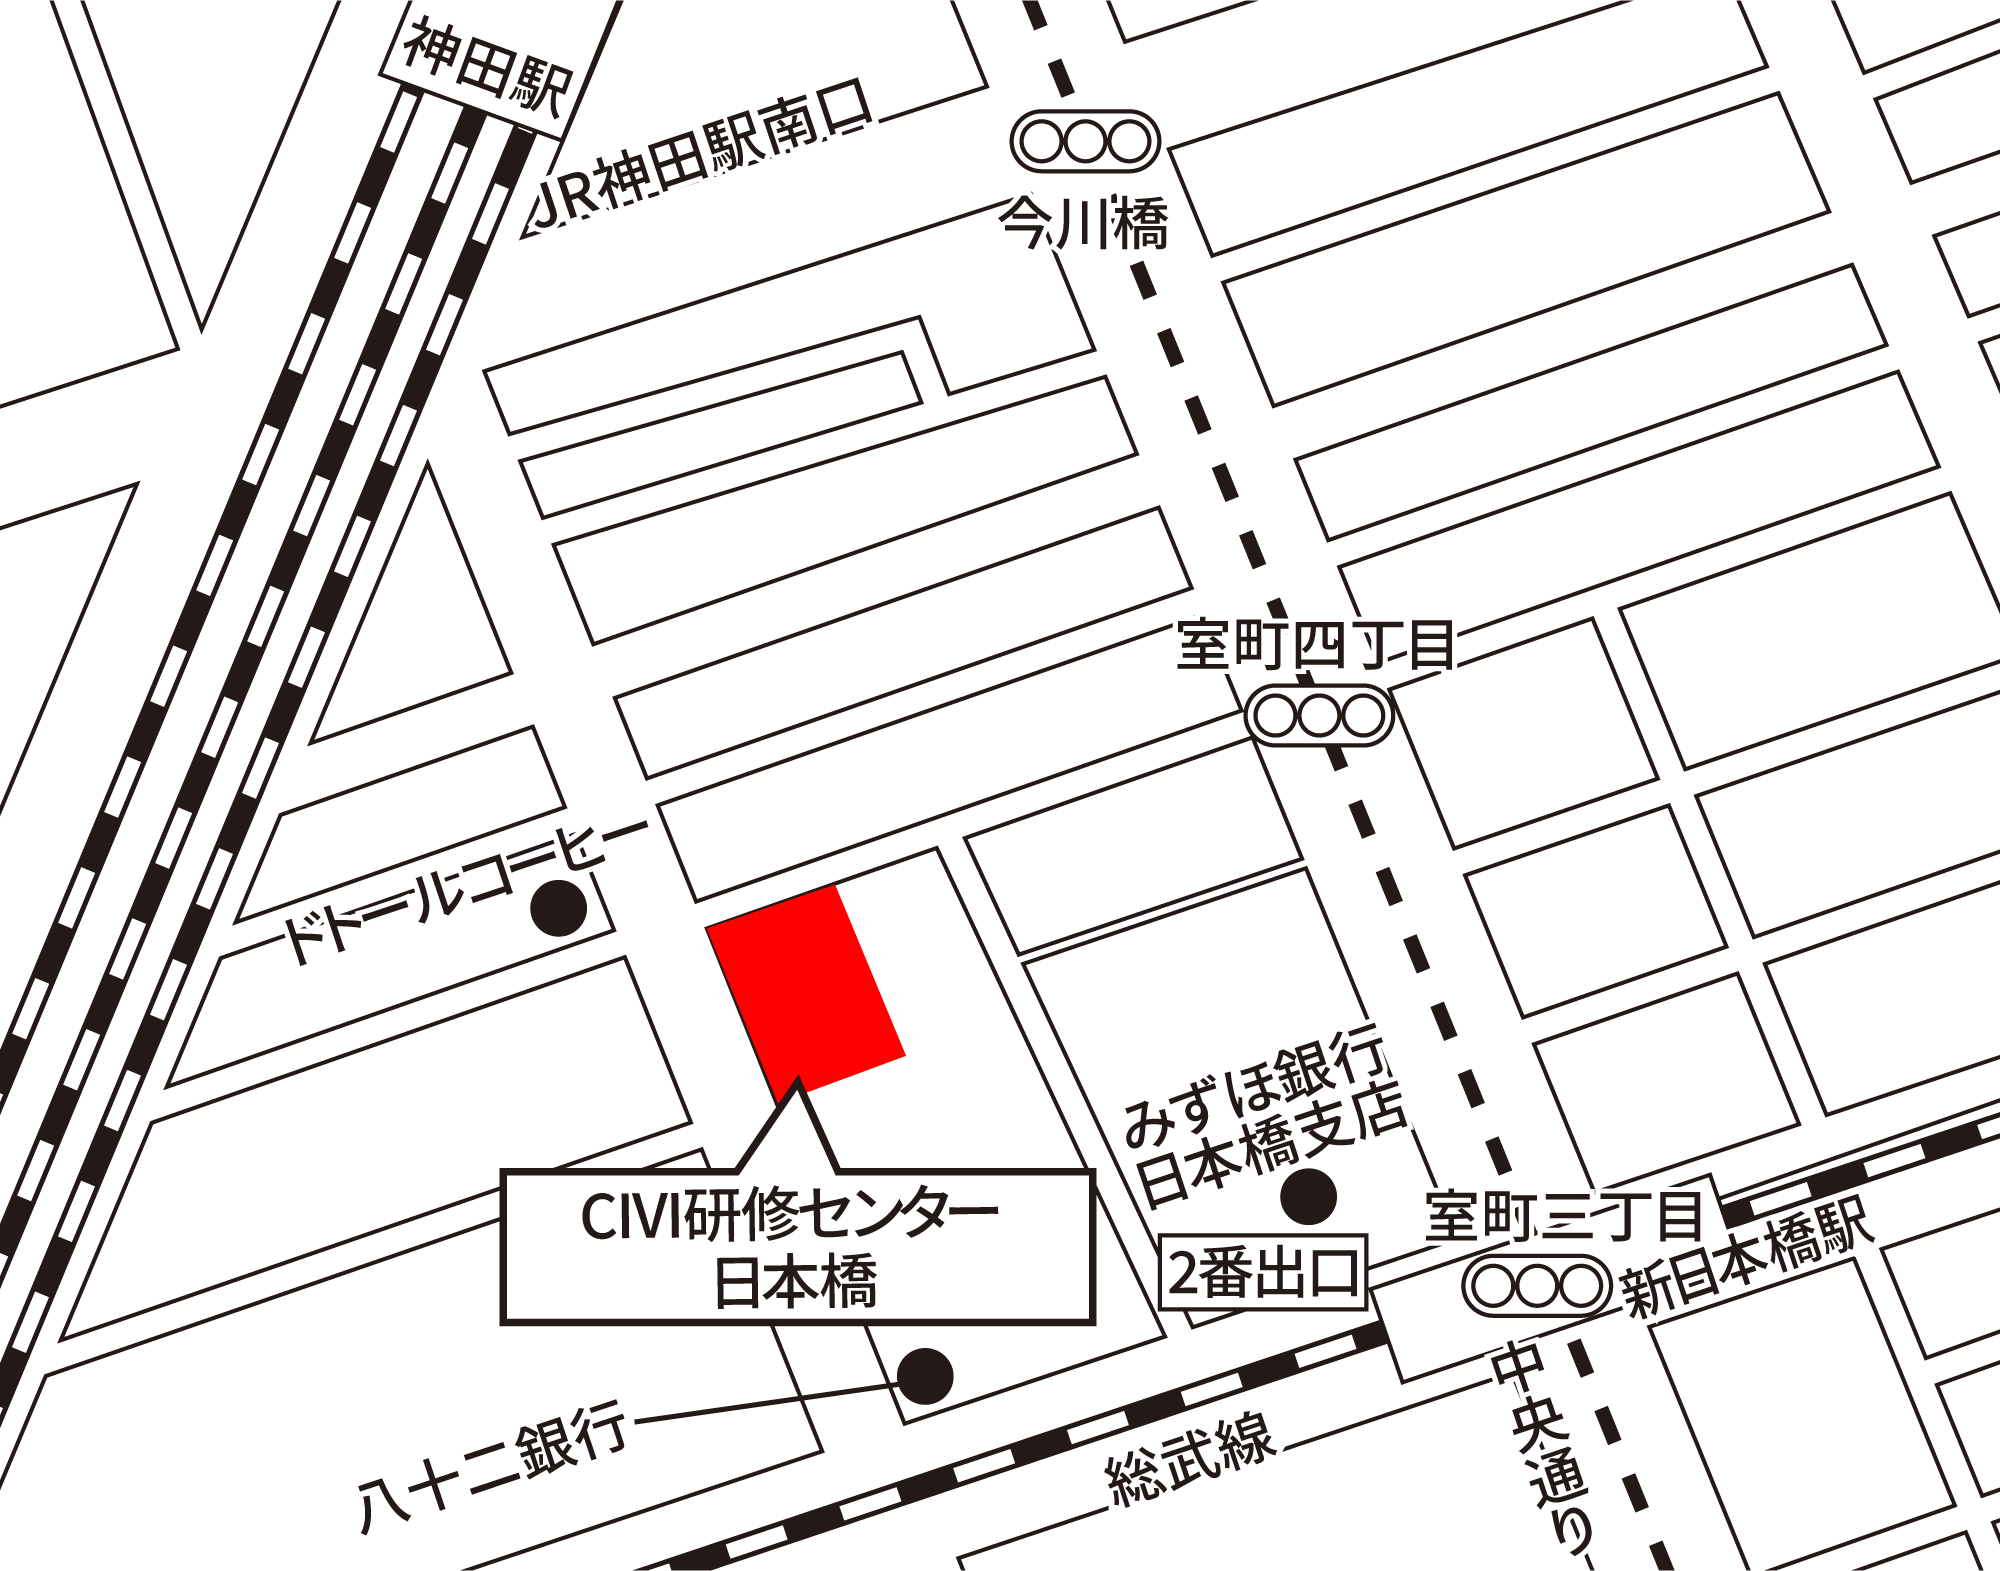 CIVI研修センター日本橋 地図